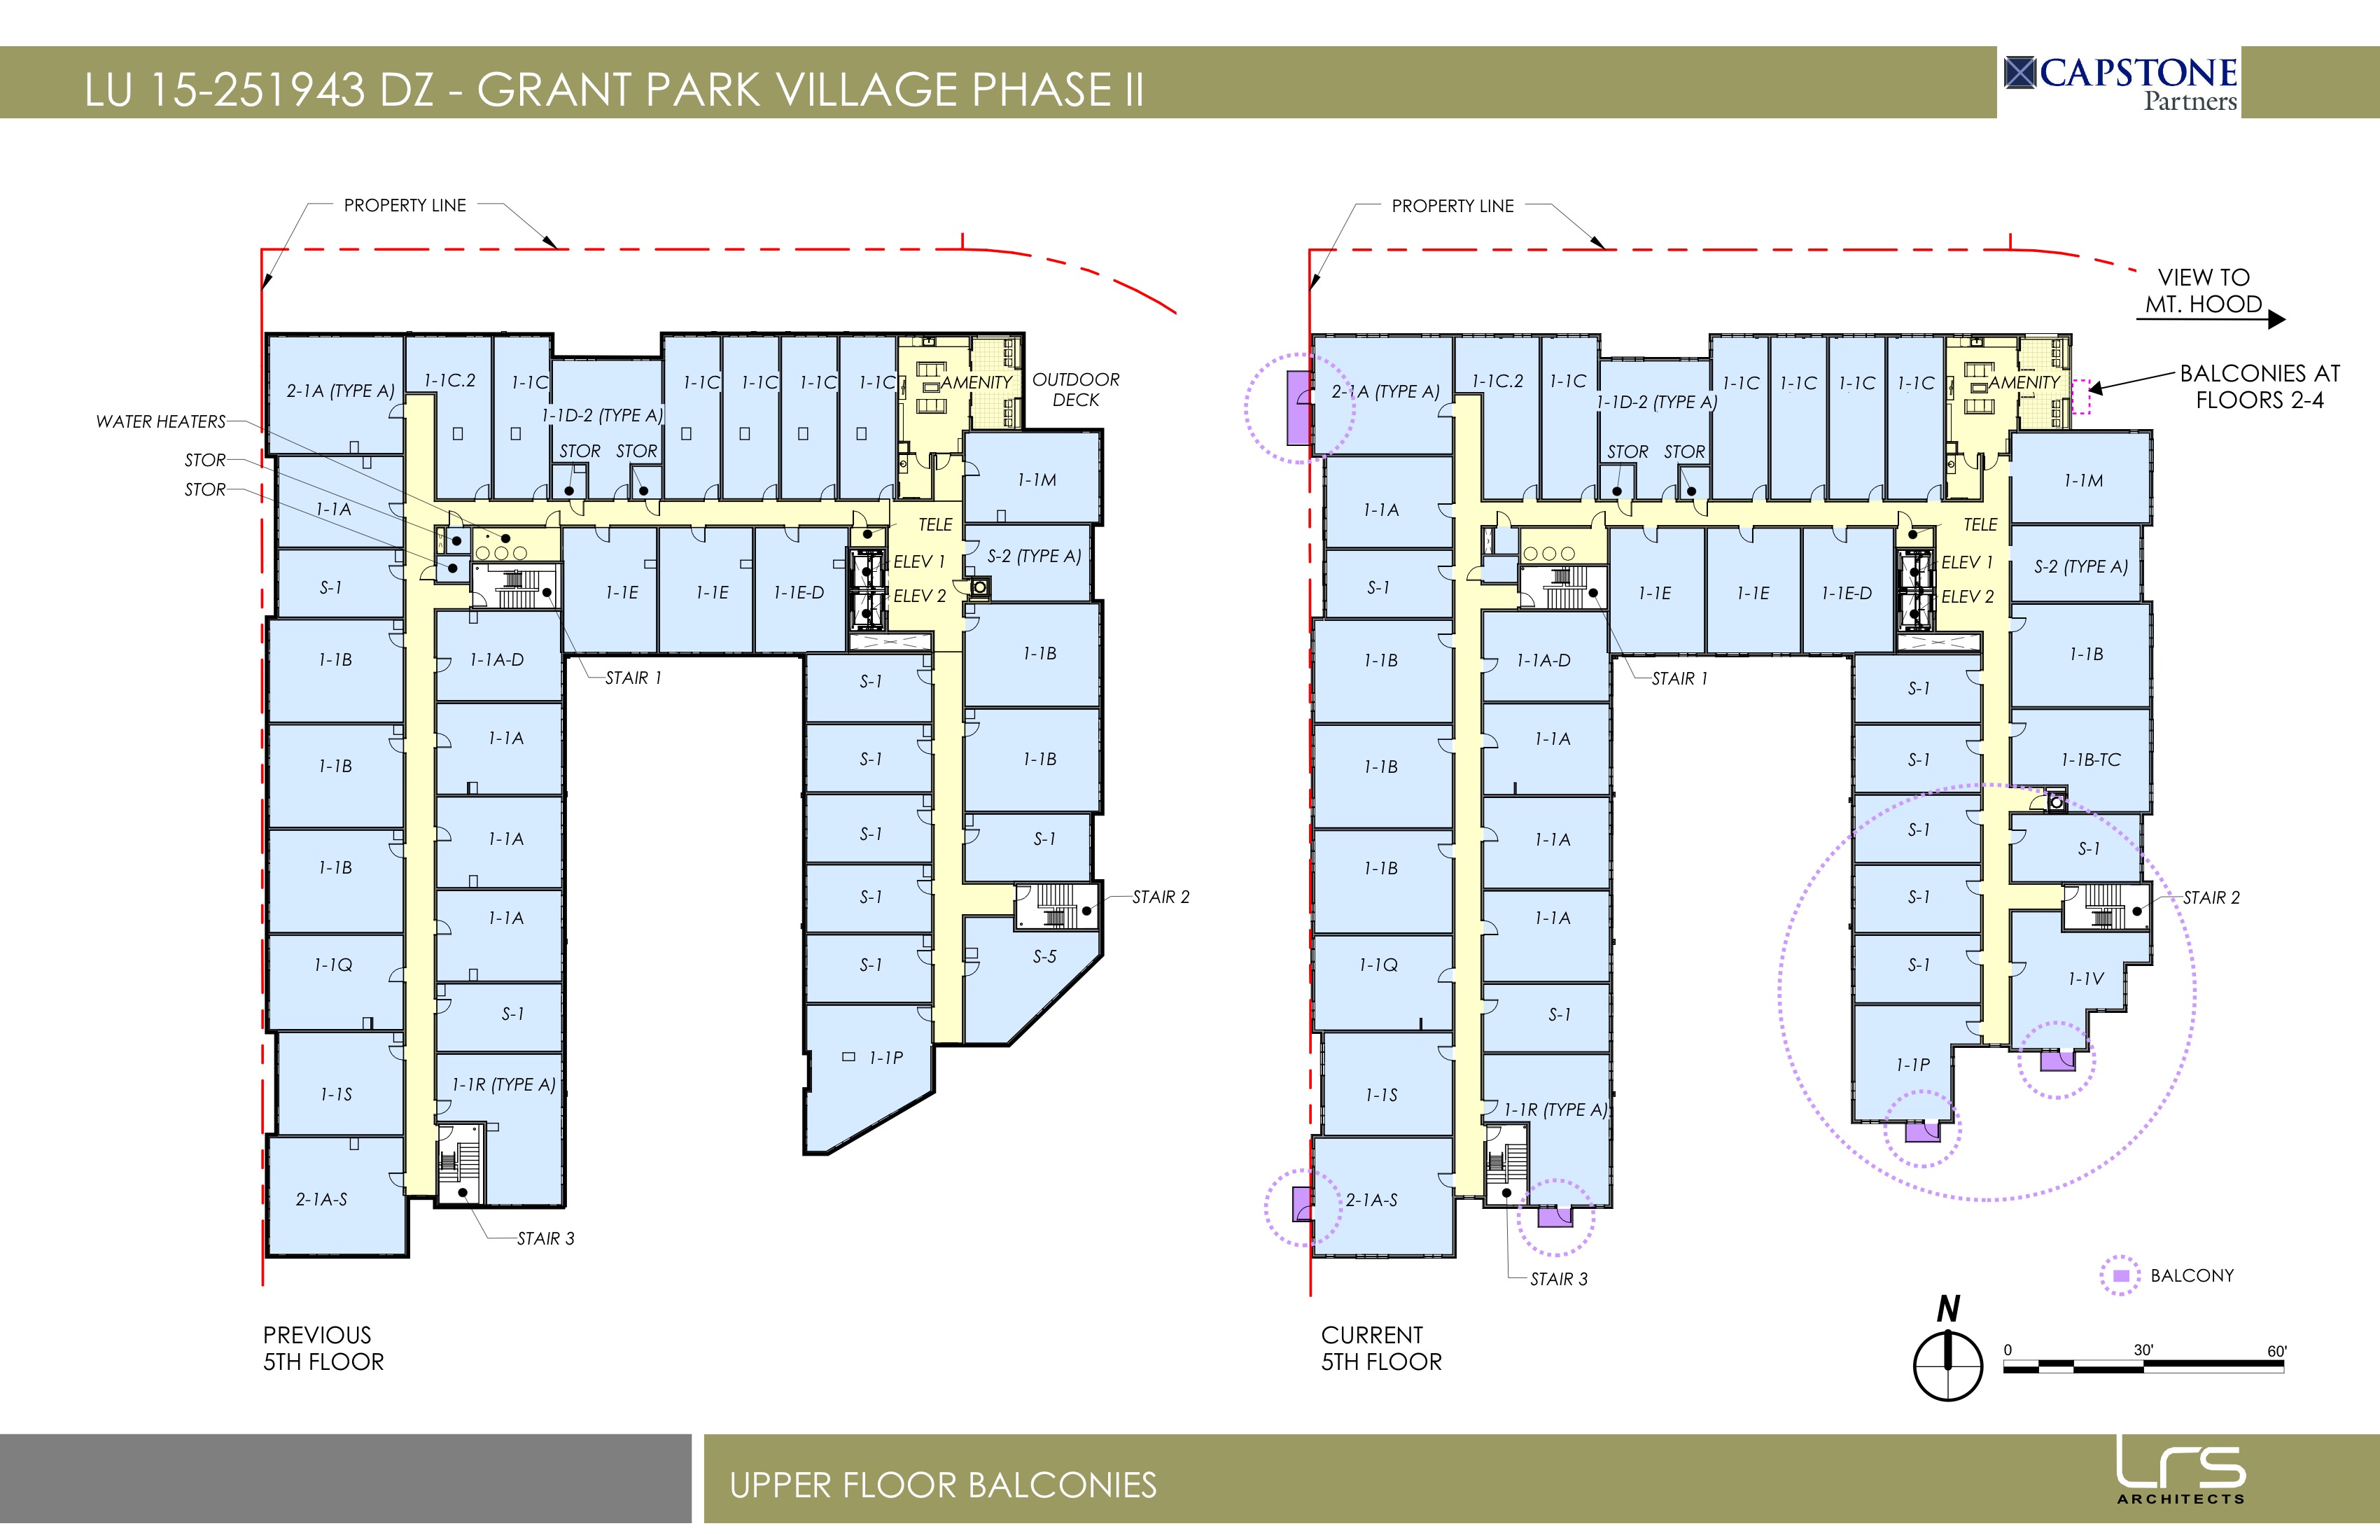 Grant Park Village Phase II